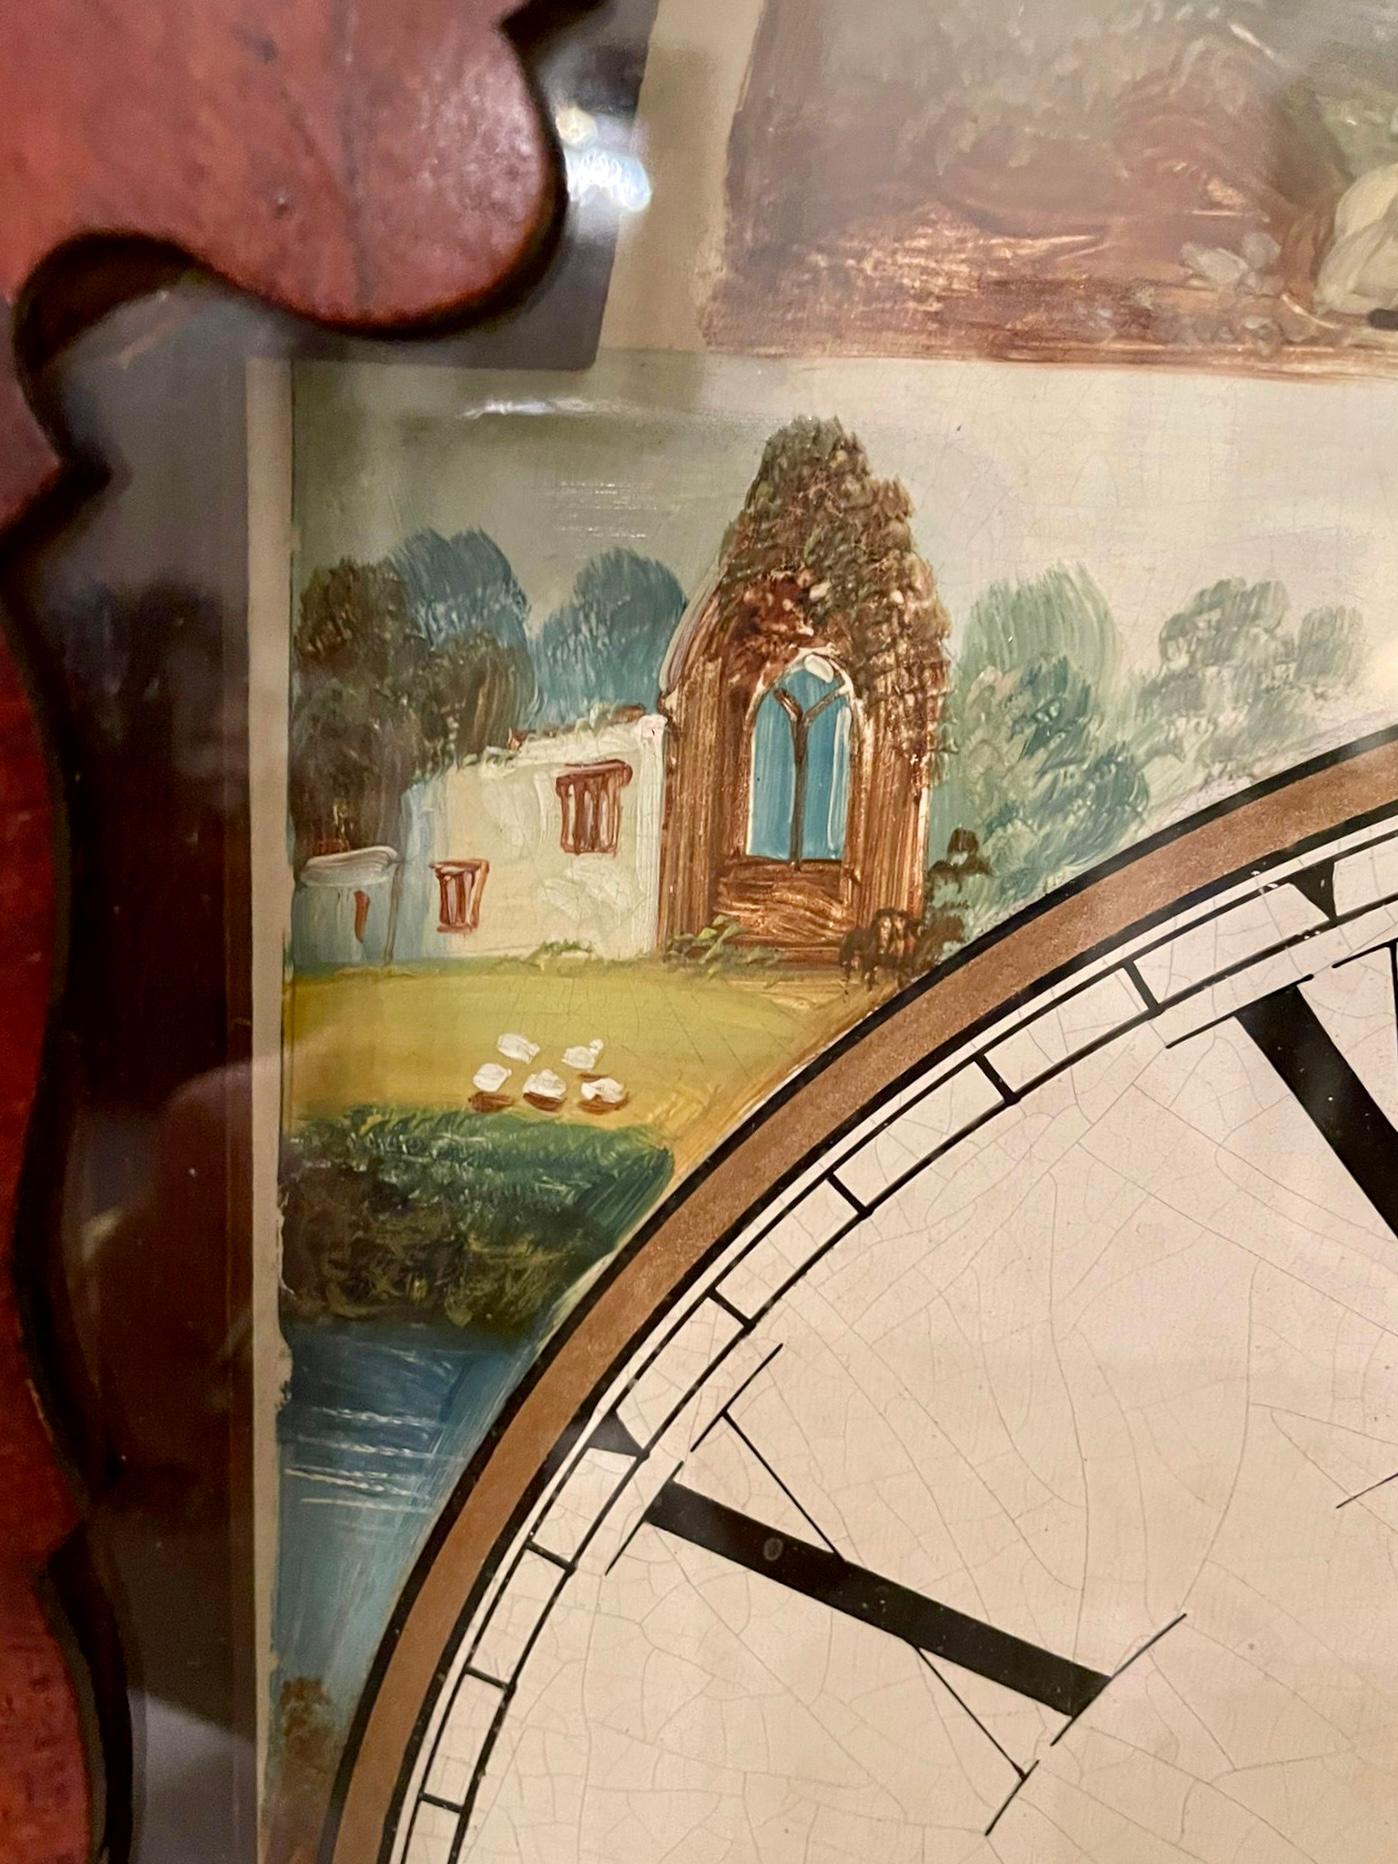 19th Century Antique George III Quality Mahogany Longcase Clock by Dan Williams, Crickhowell For Sale